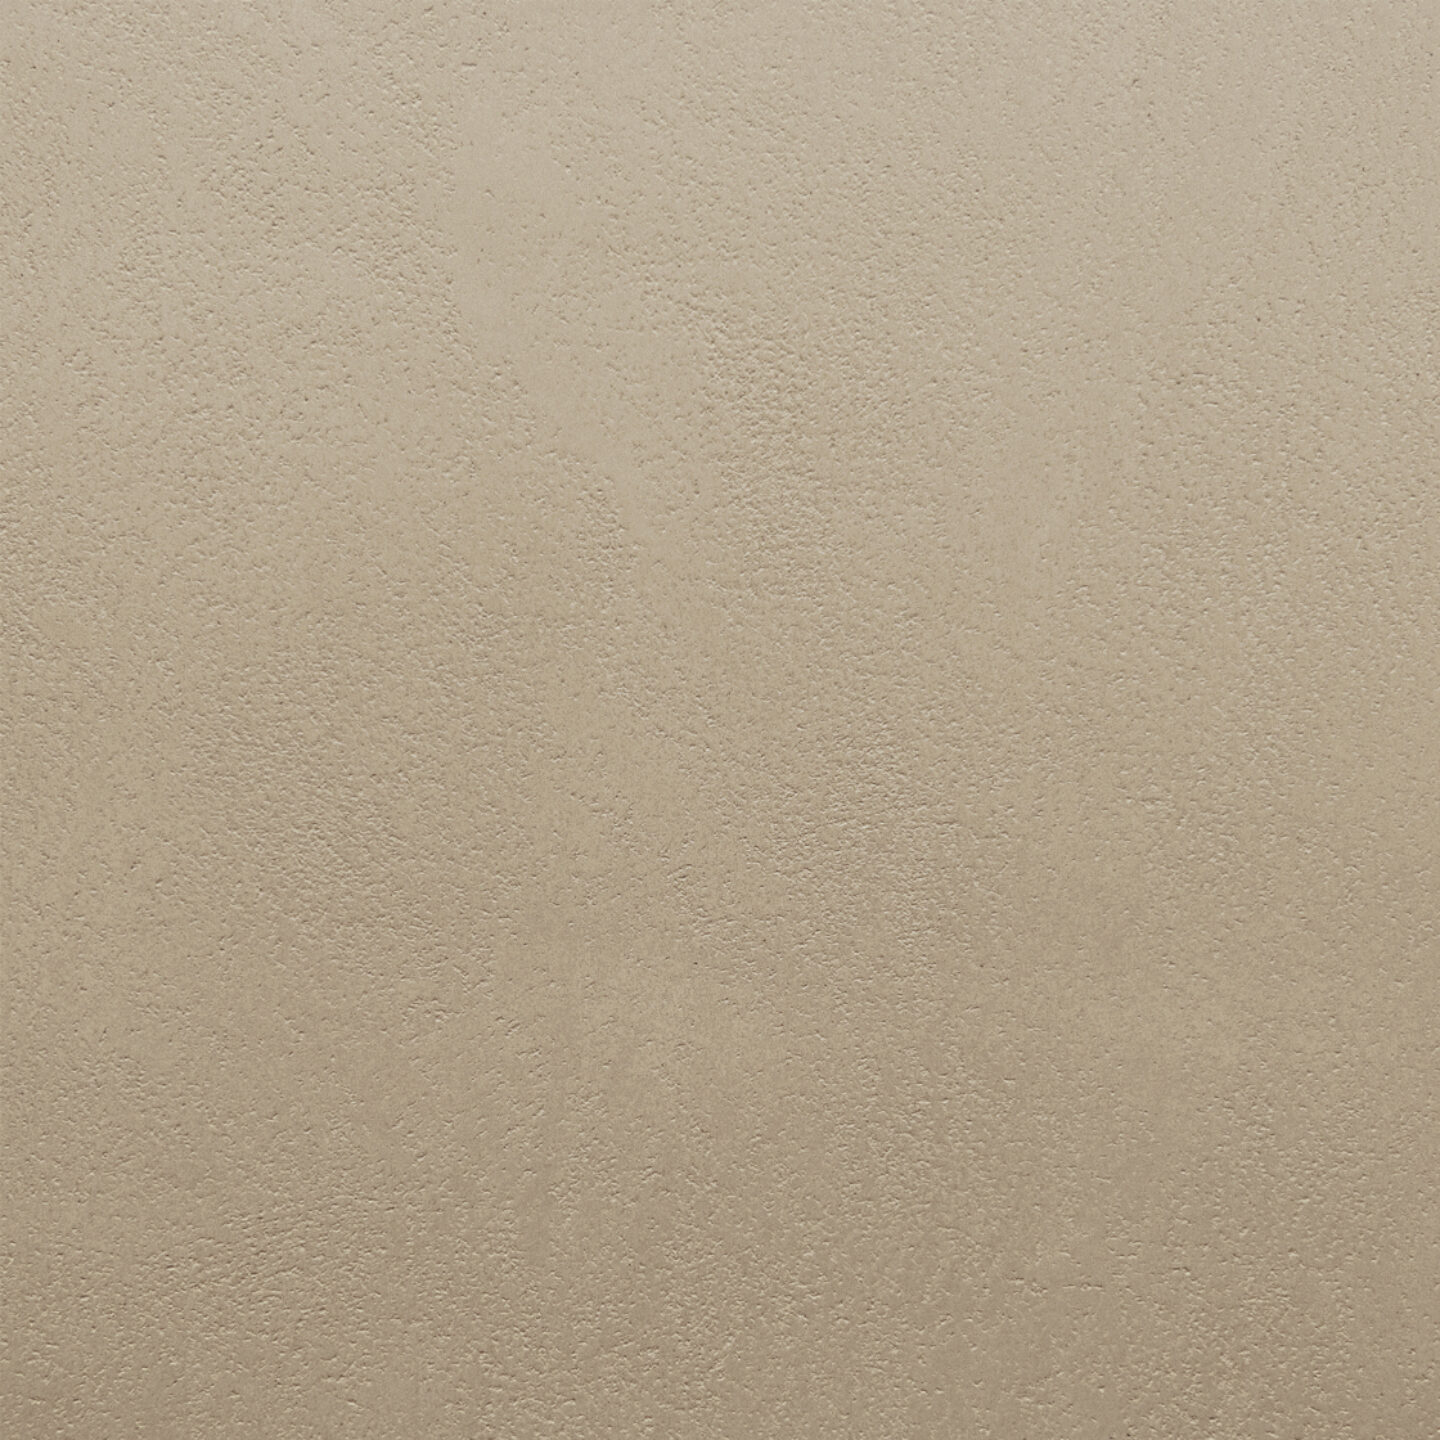 Close up of Armourcoat leatherstone exterior polished plaster finish - 48